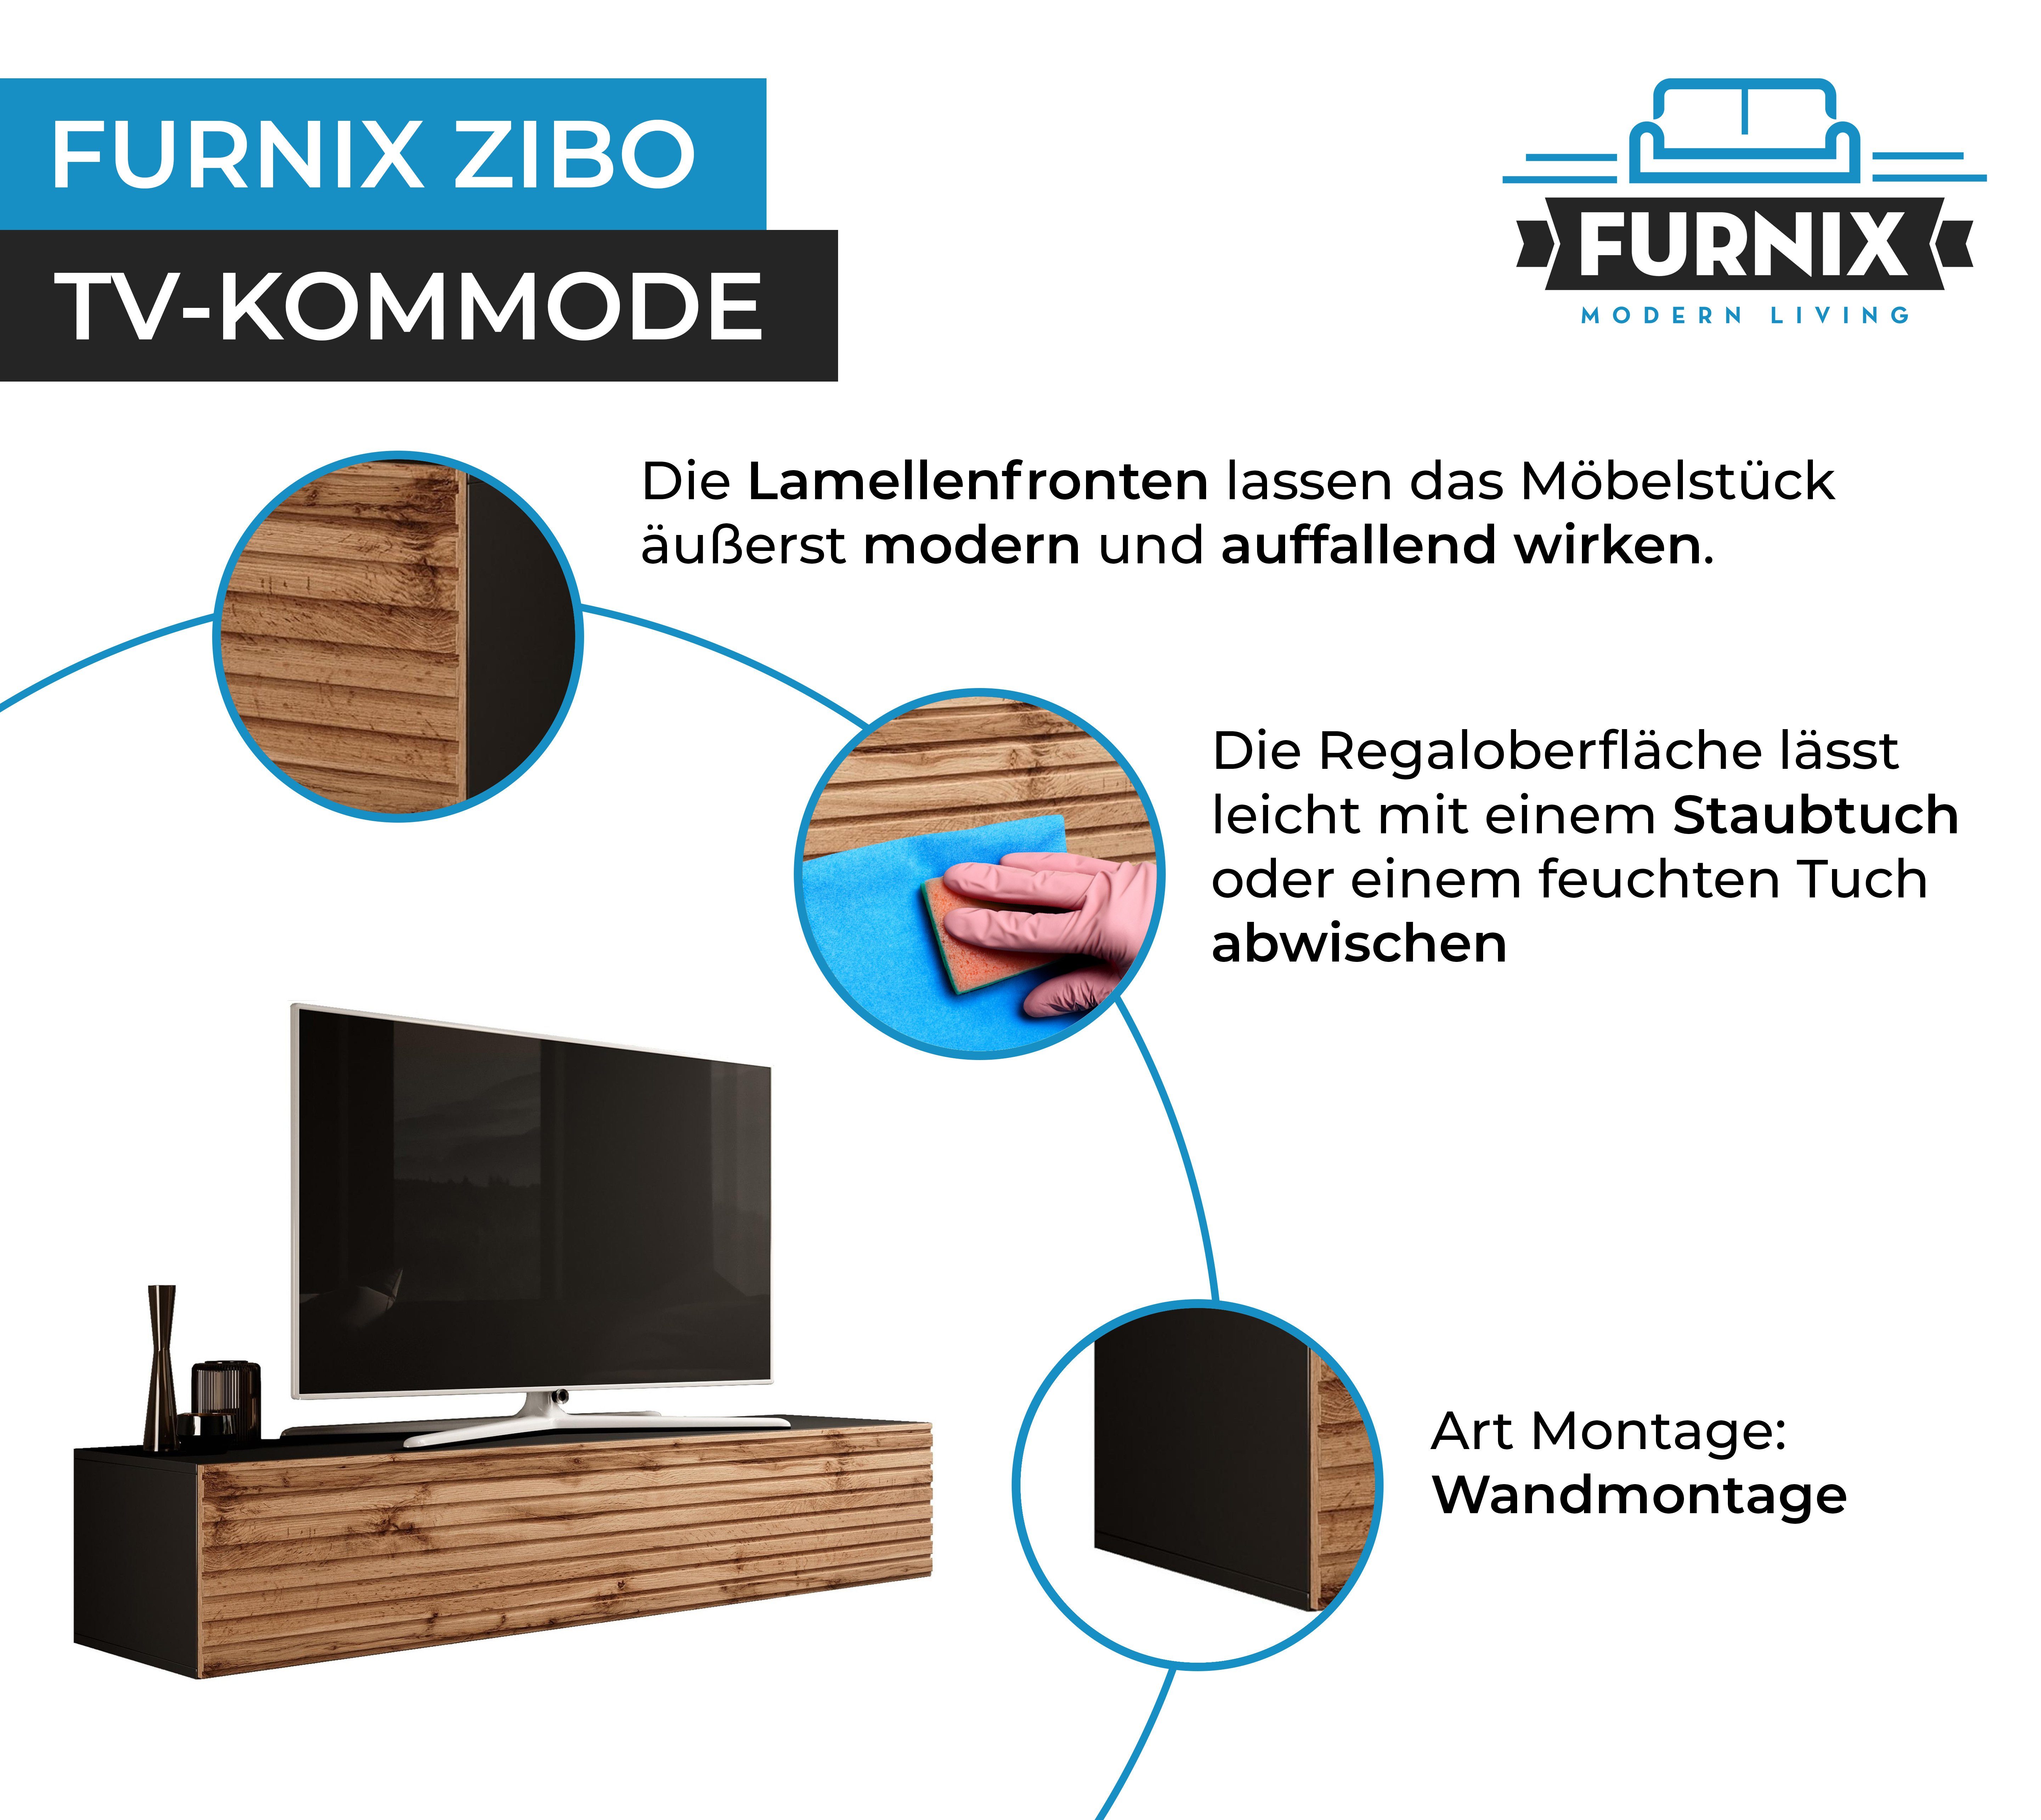 Furnix TV-Schrank Lowboard cm Designerschrank B160 T40 Lamellen x x ZIBO Hängeschrank Lamellenfront Schwarz/Wotan mit 160 H34